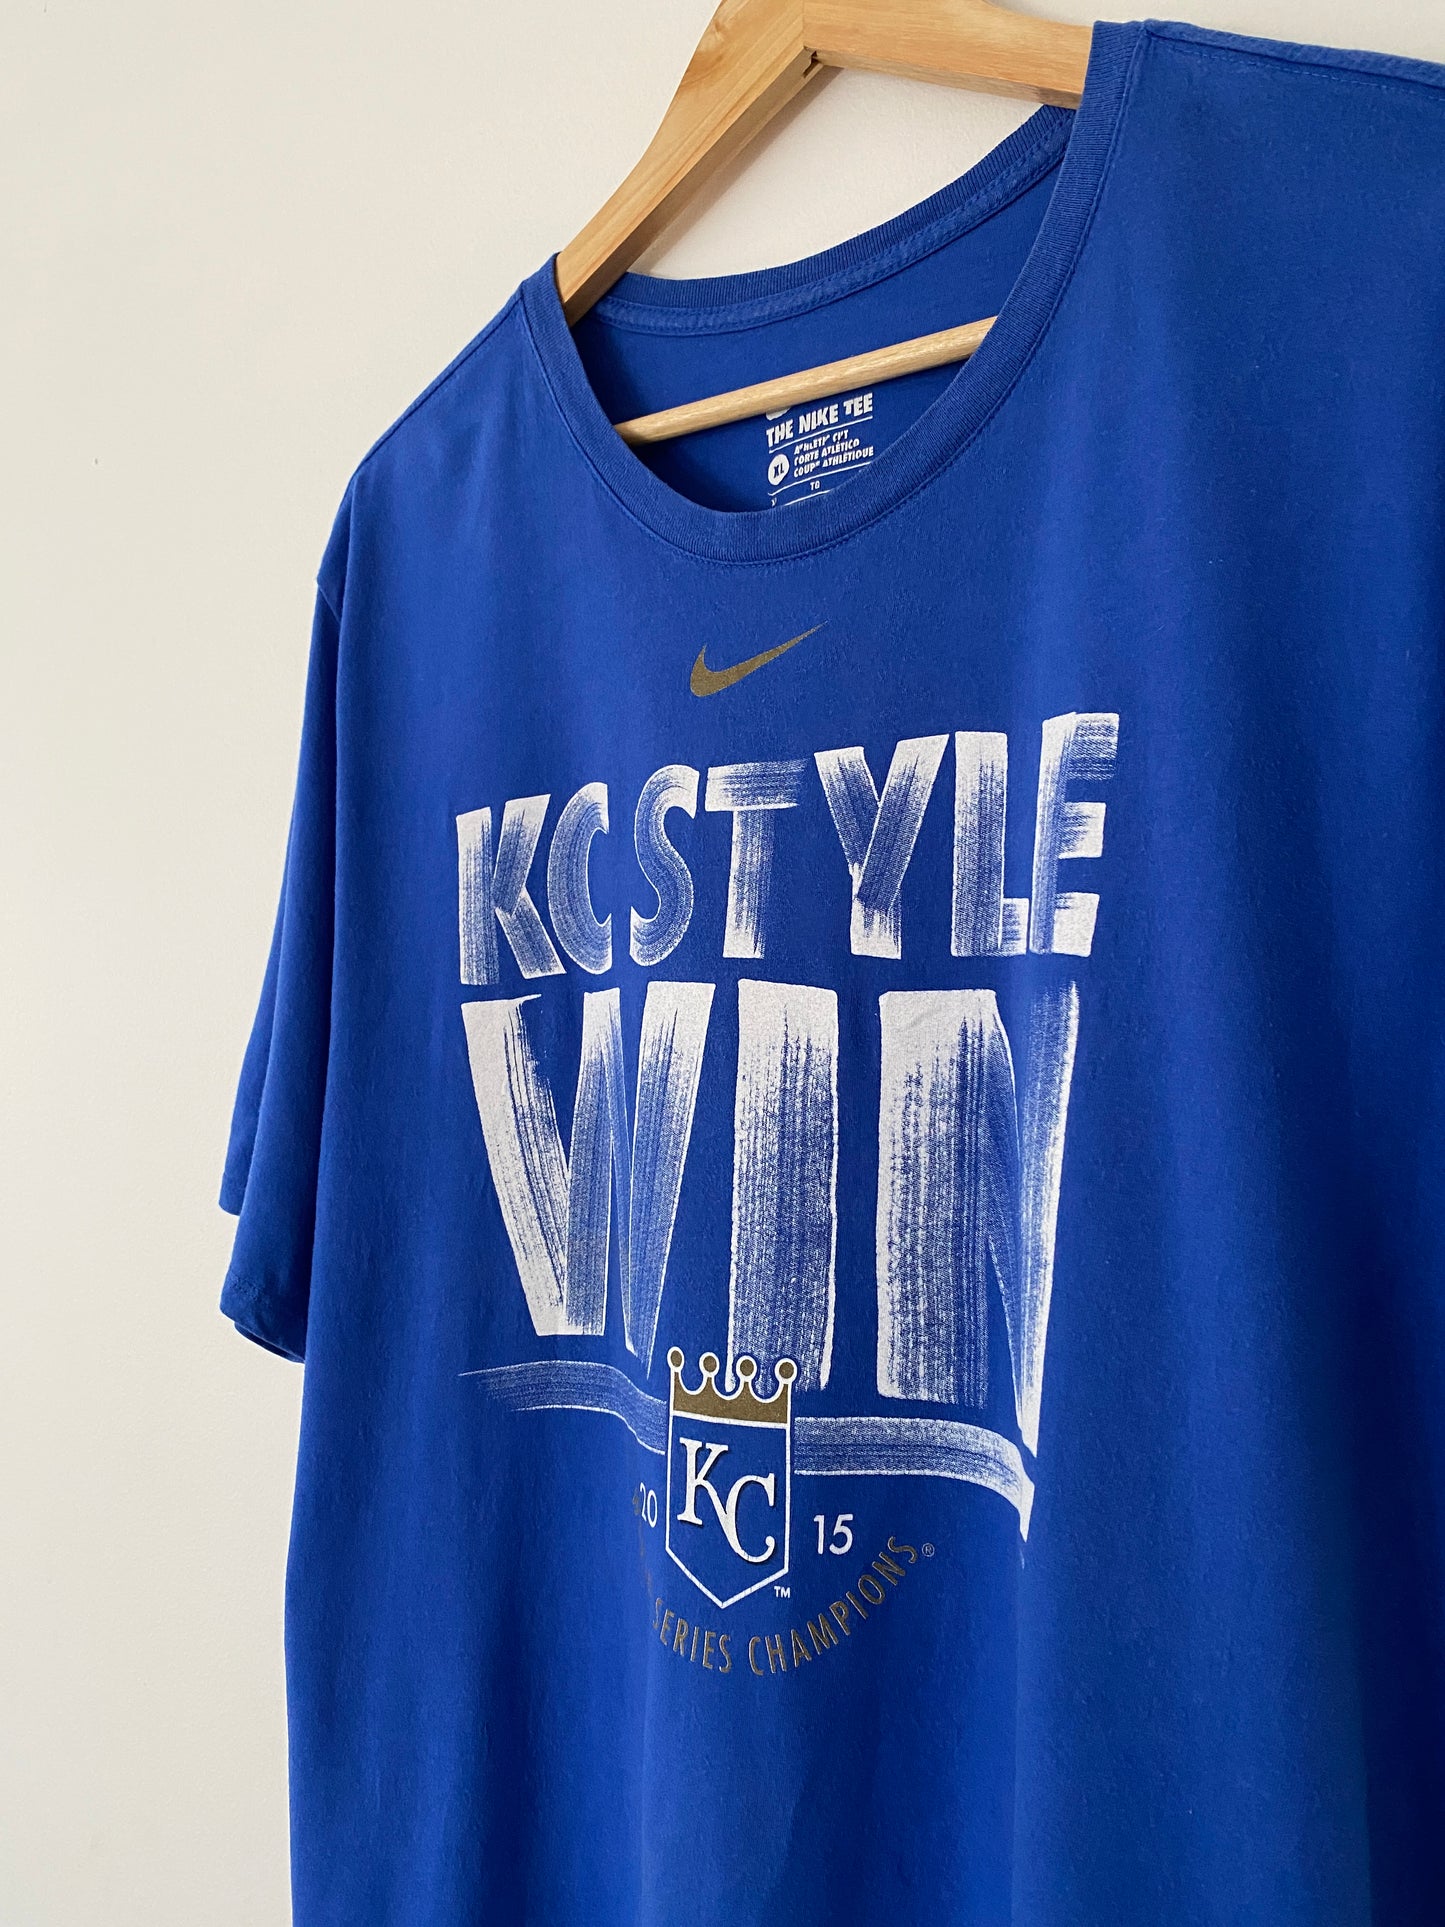 Kansas City Royals Baseball T-Shirt - XL